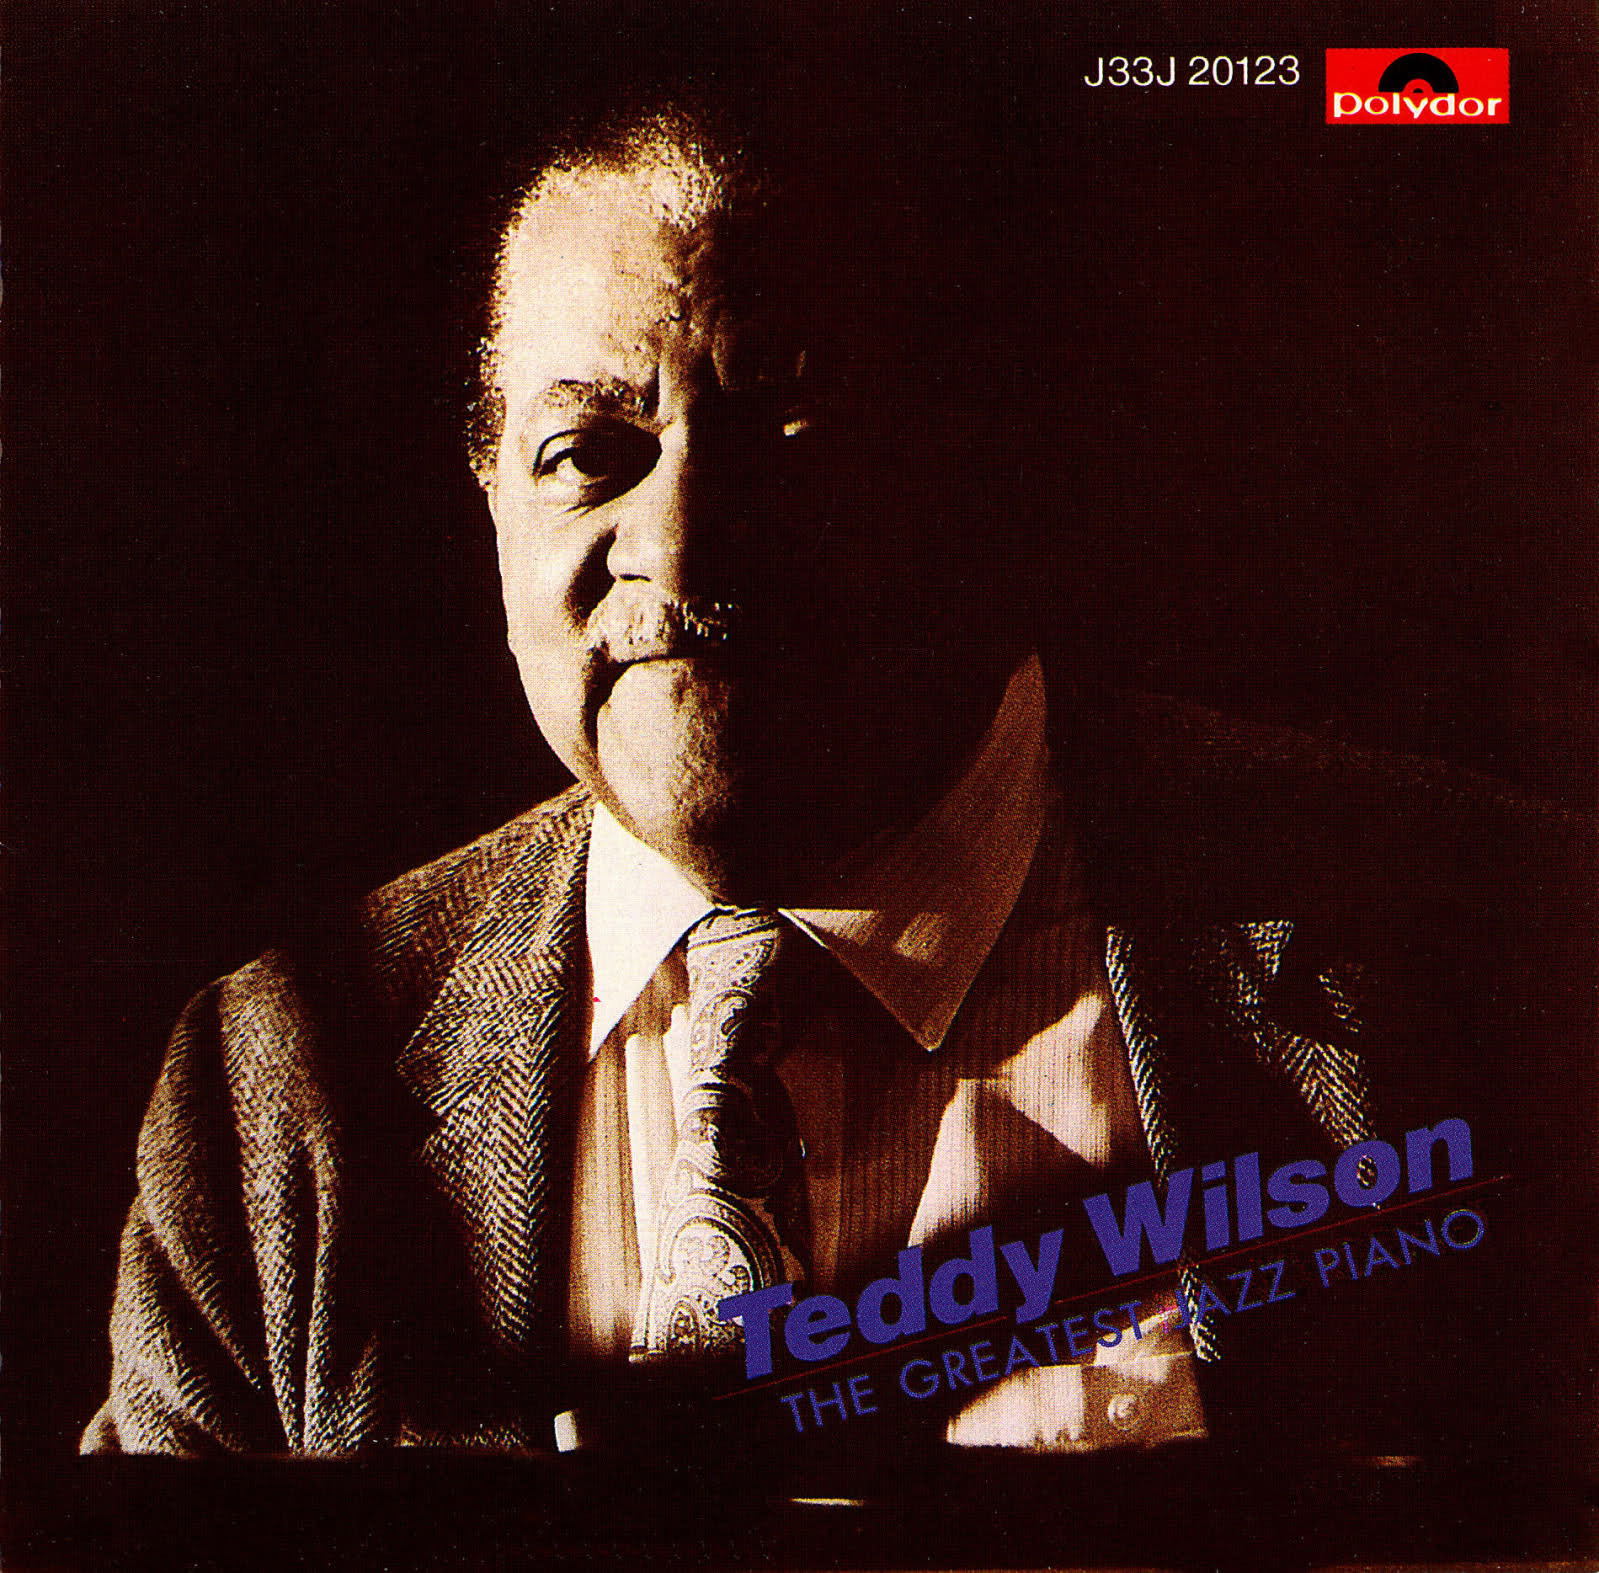 TEDDY WILSON - The Greatest Jazz Piano cover 